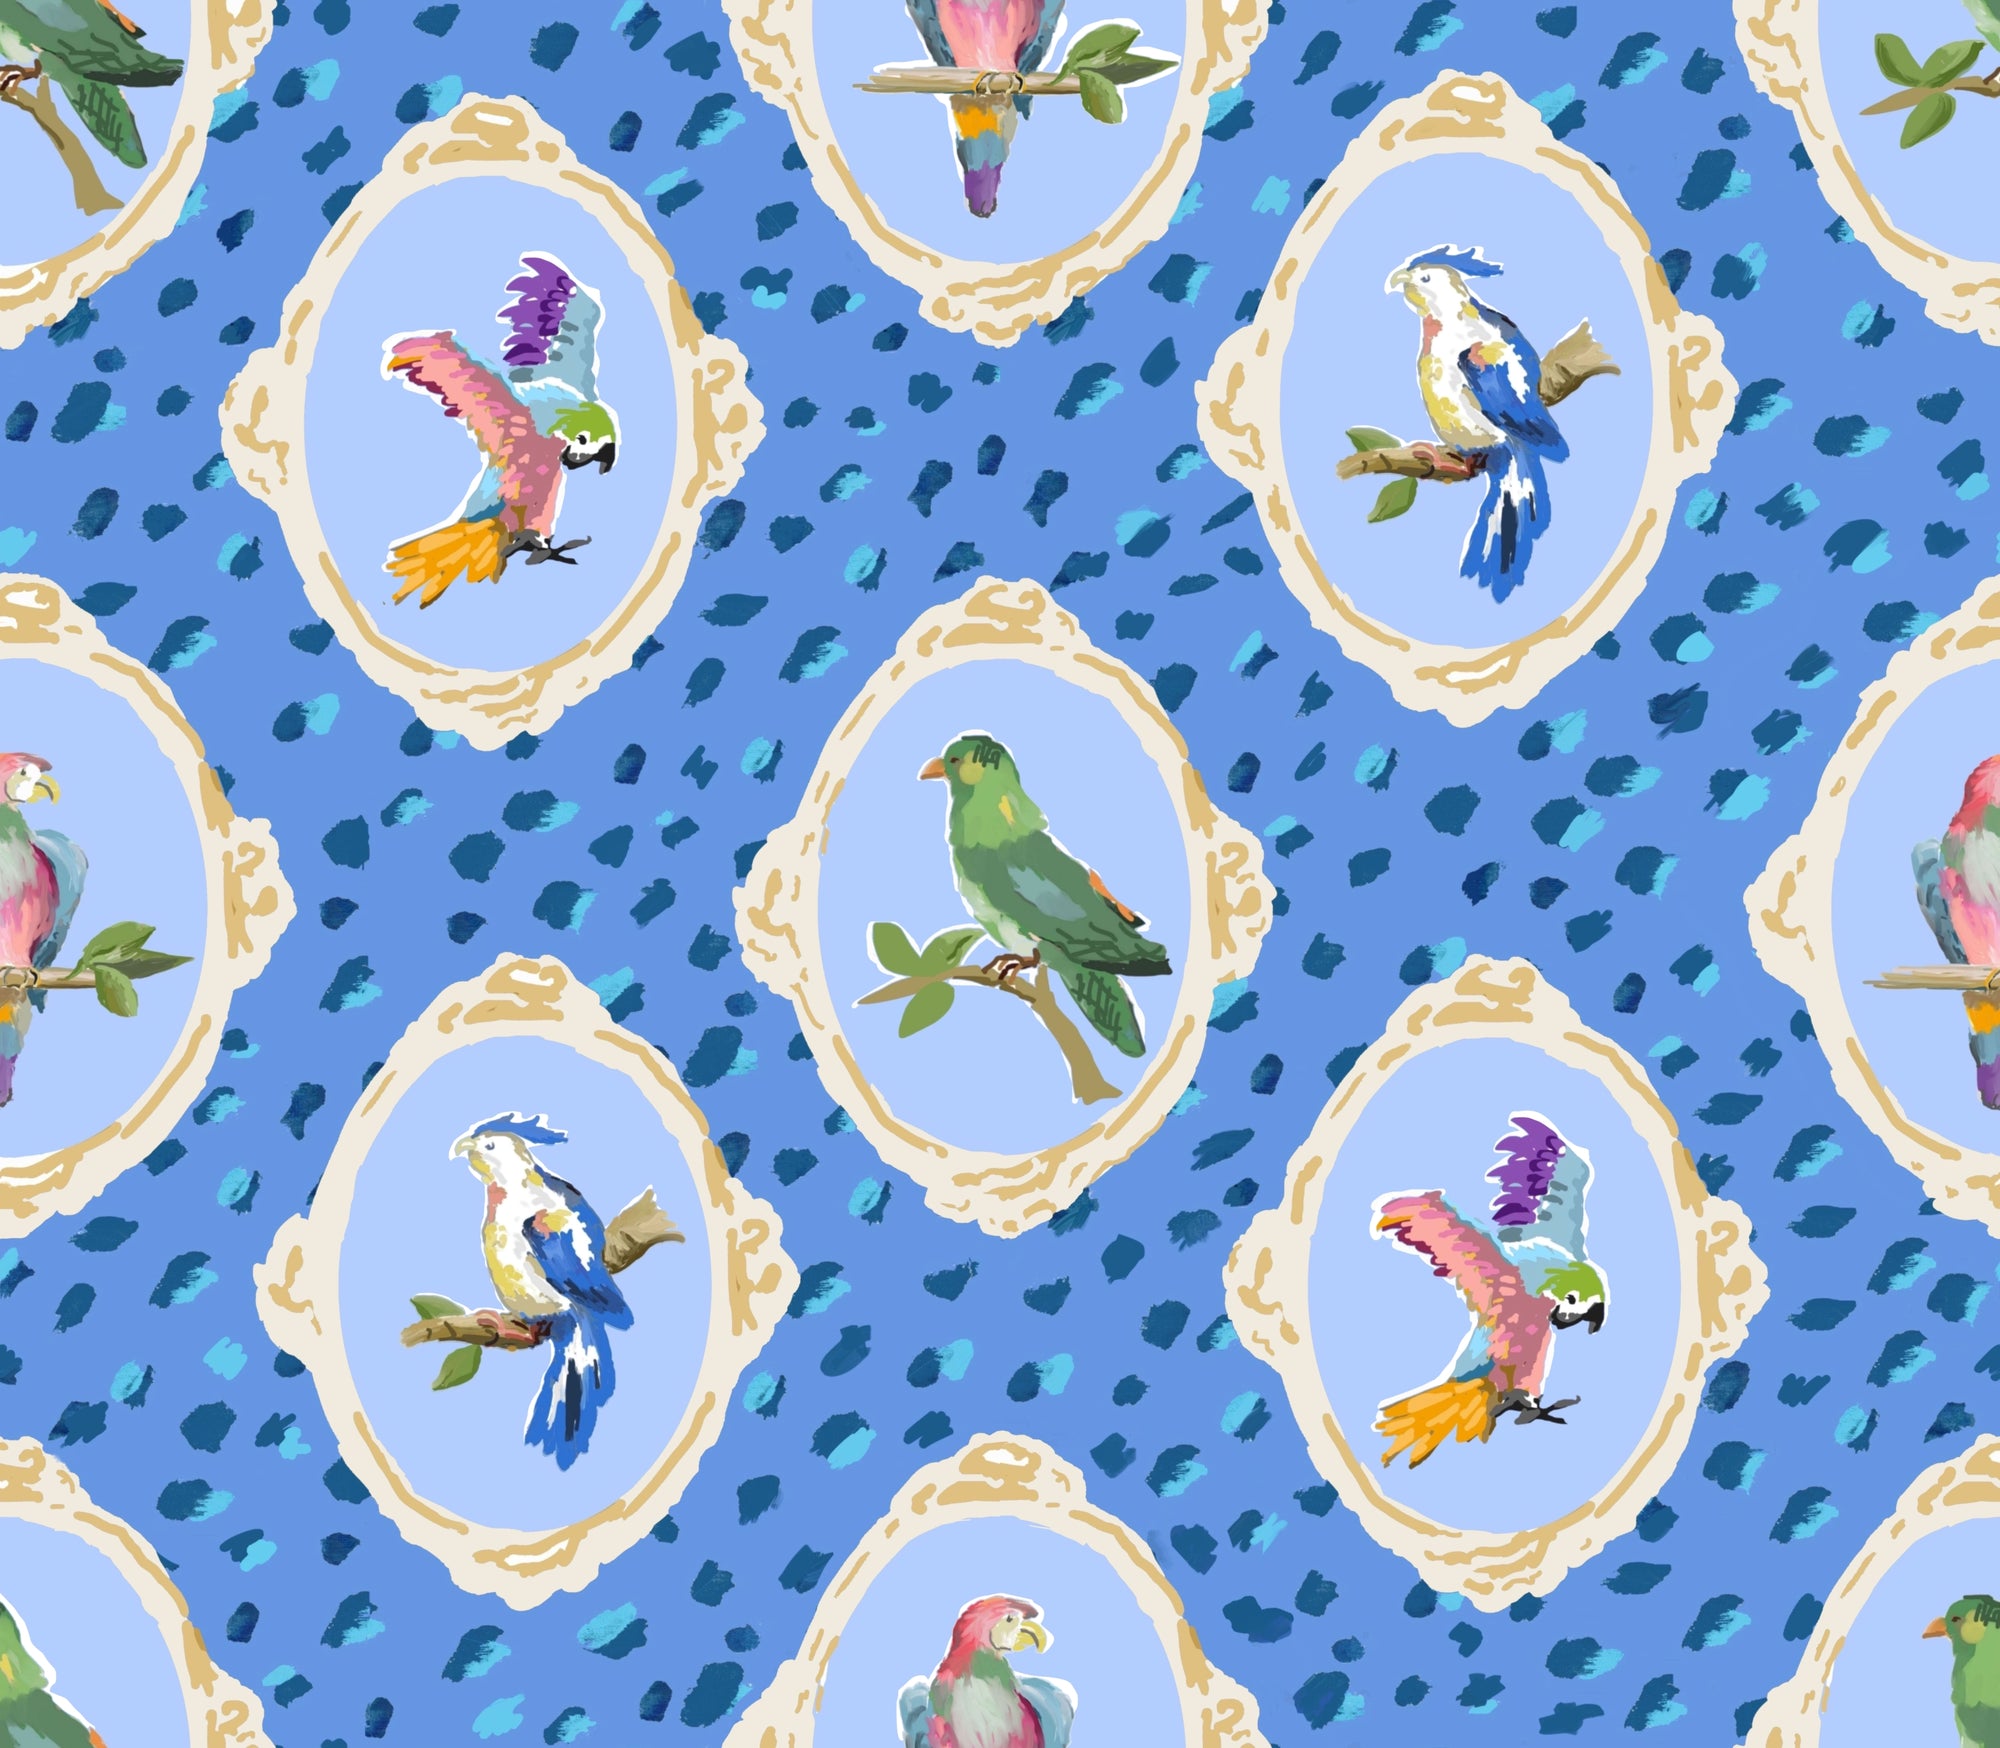 Dana Gibson Eden in Blue, Wallpaper and Fabric